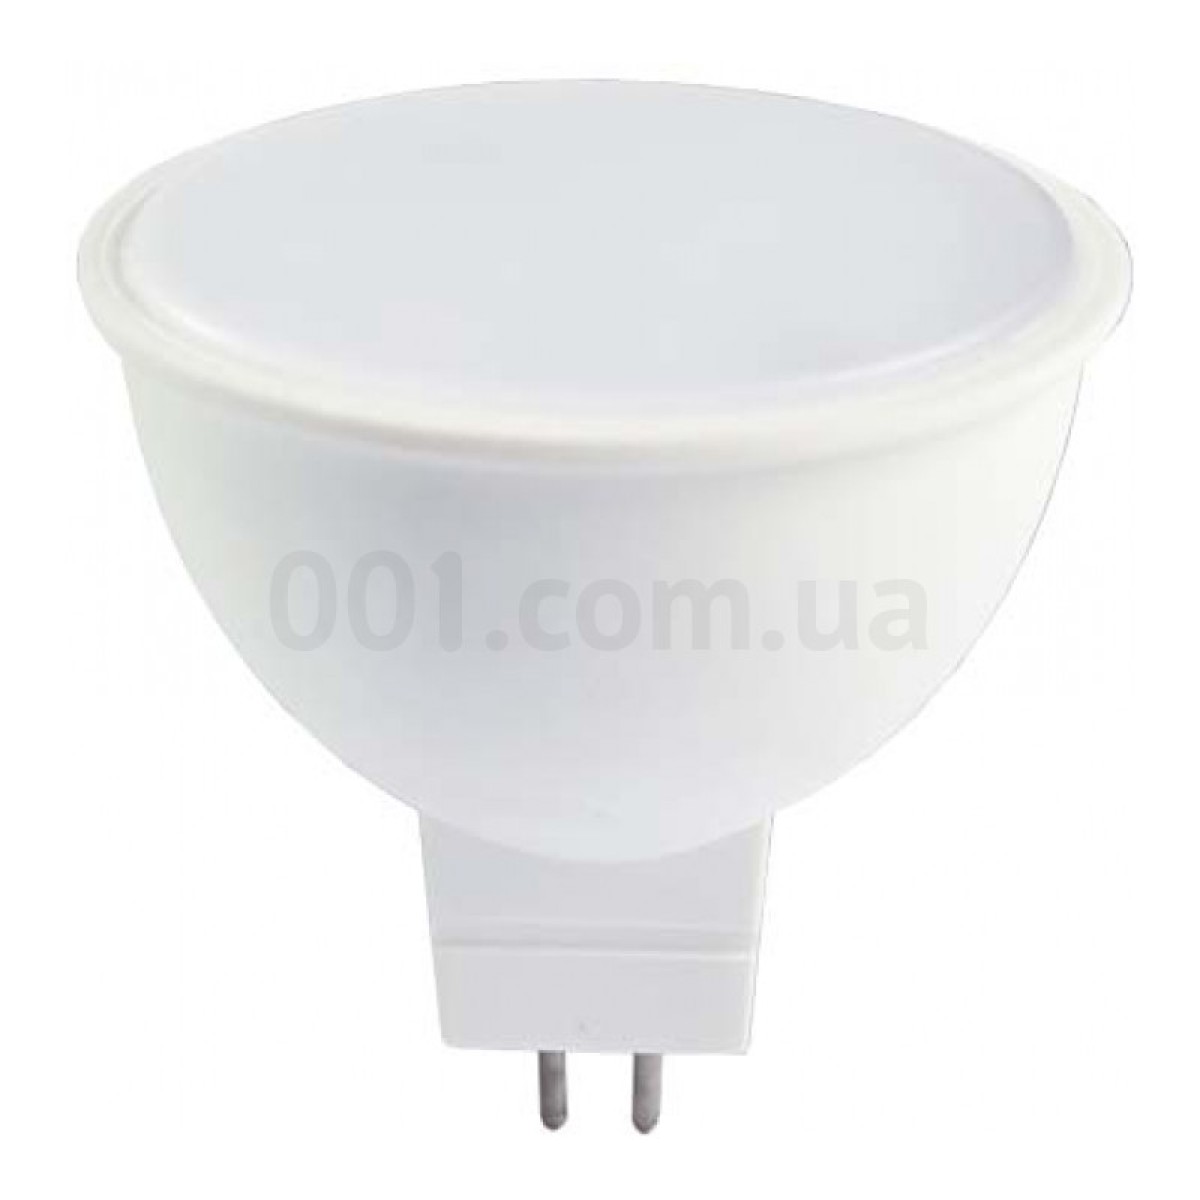 Светодиодная лампа LB-716 MR16 6Вт 6400K G5.3, Feron 98_98.jpg